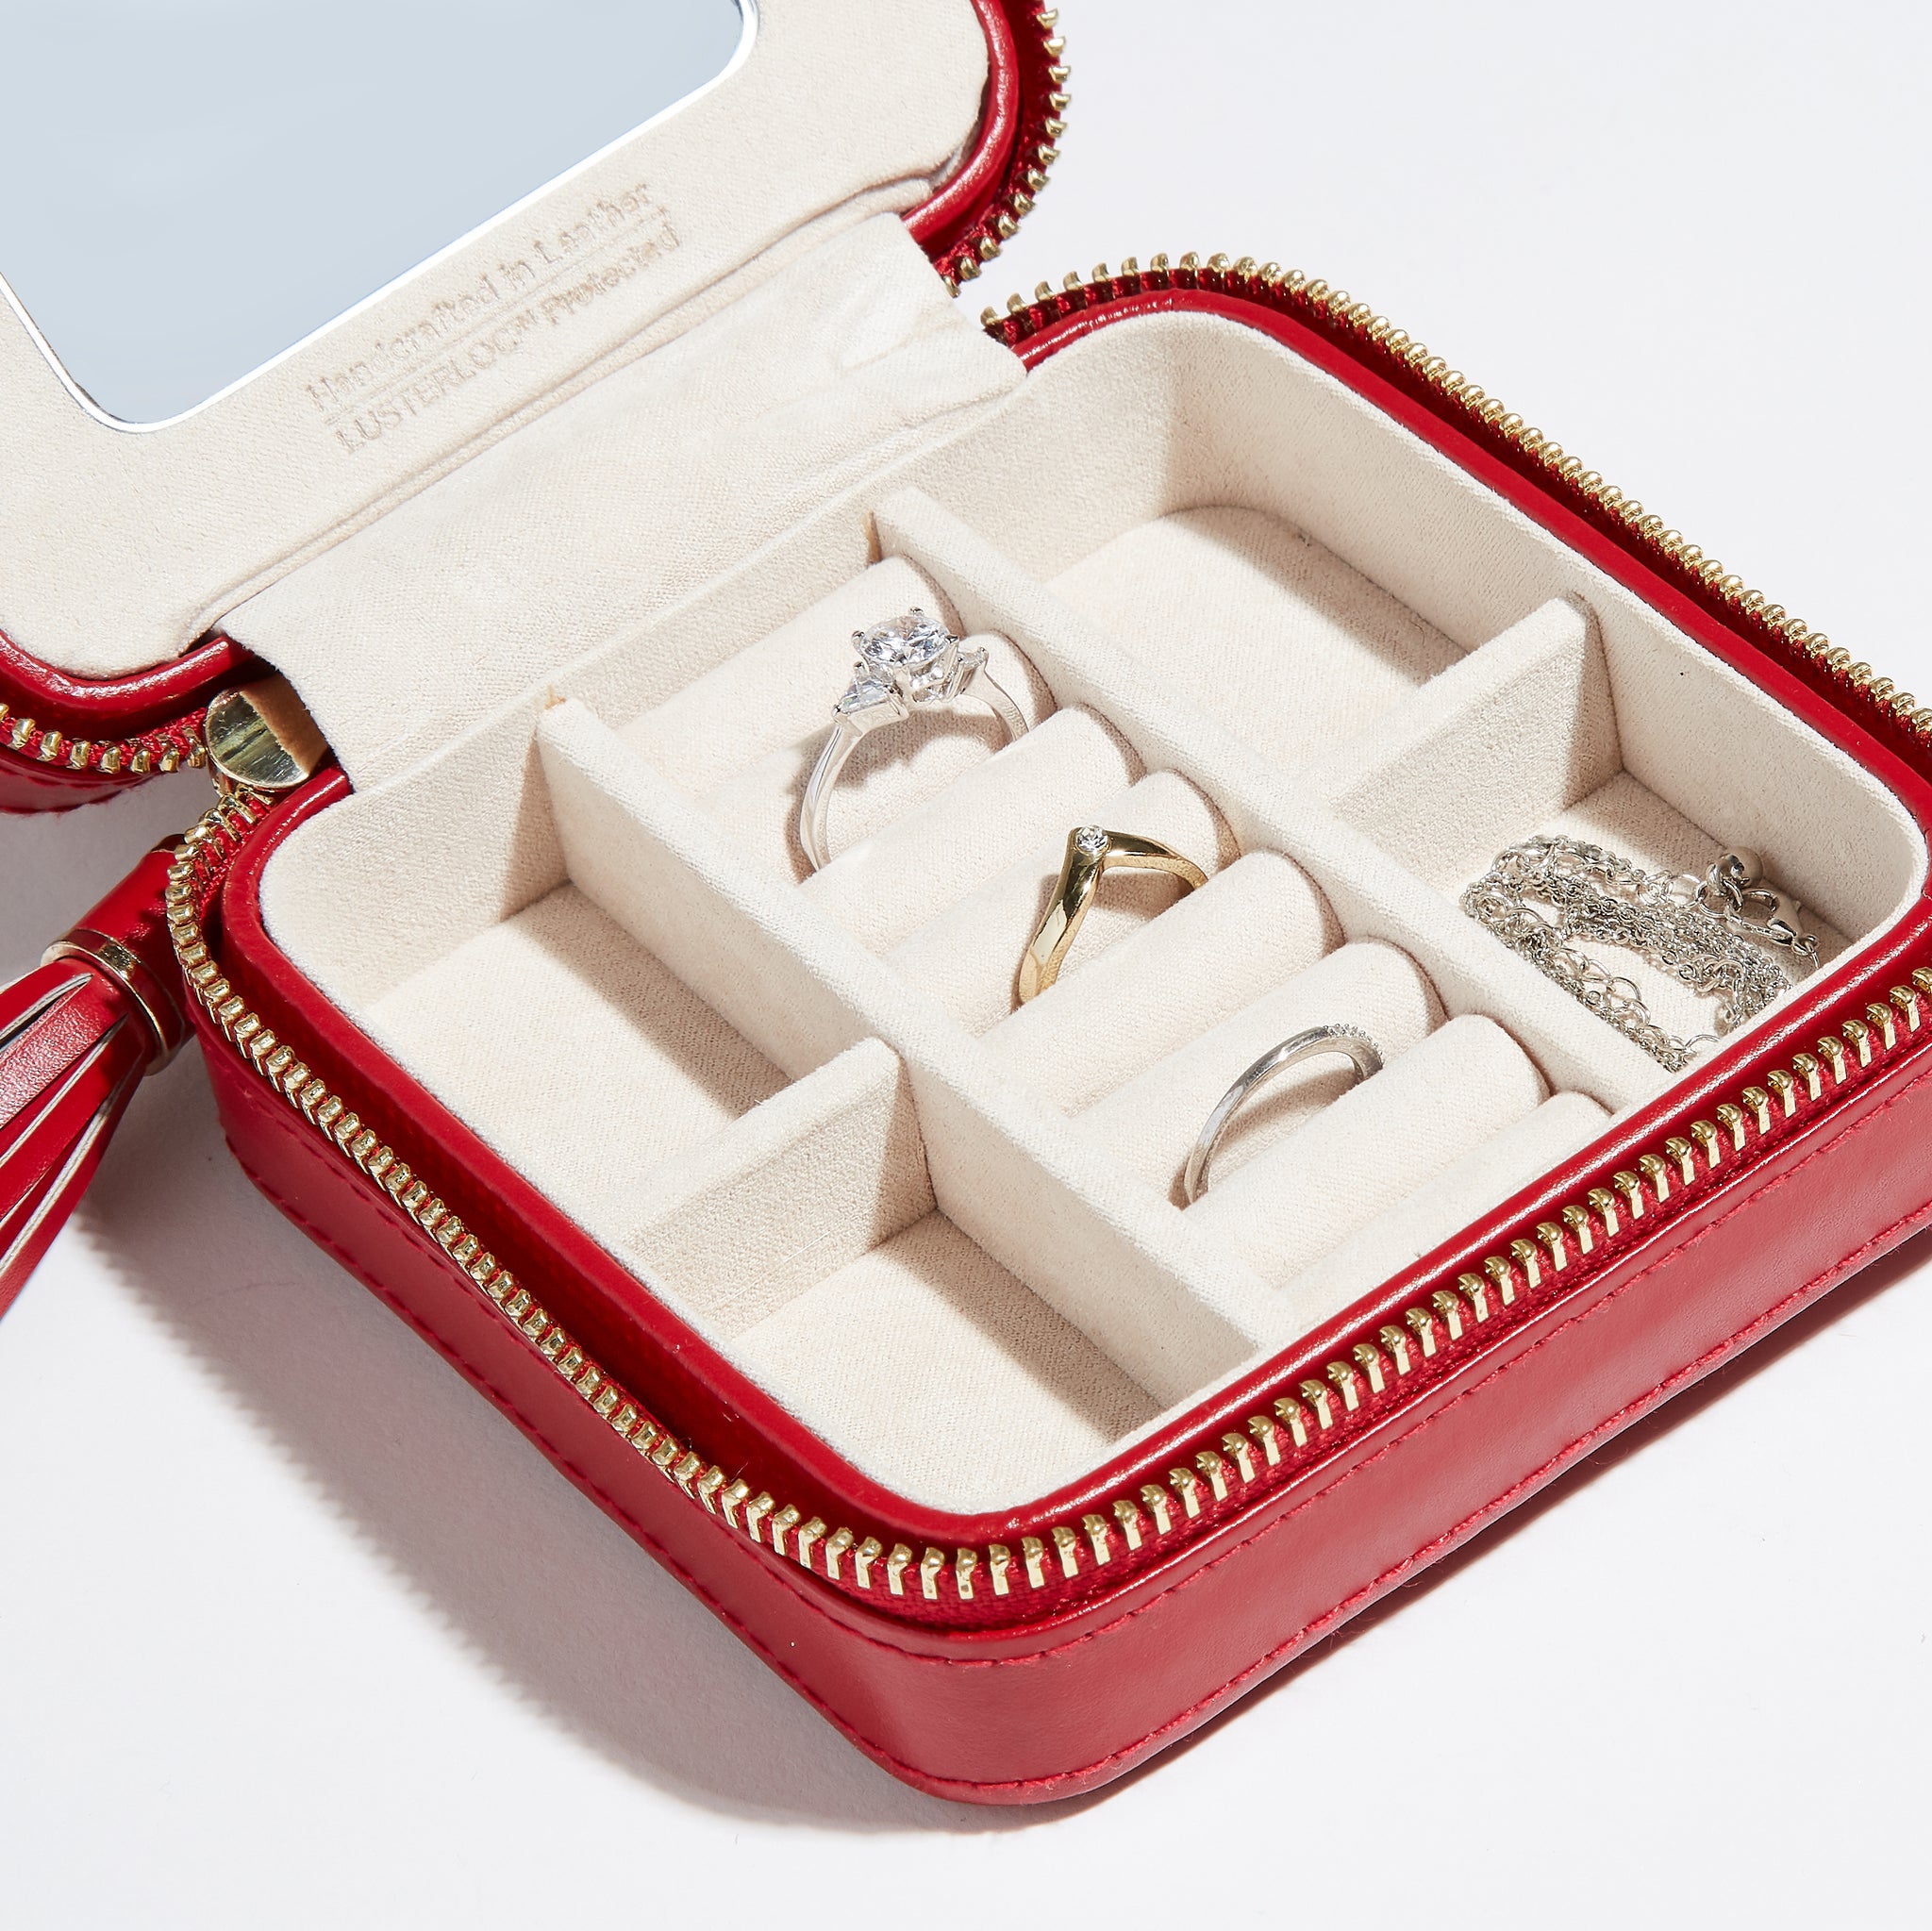 caroline zip travel jewelry case in red